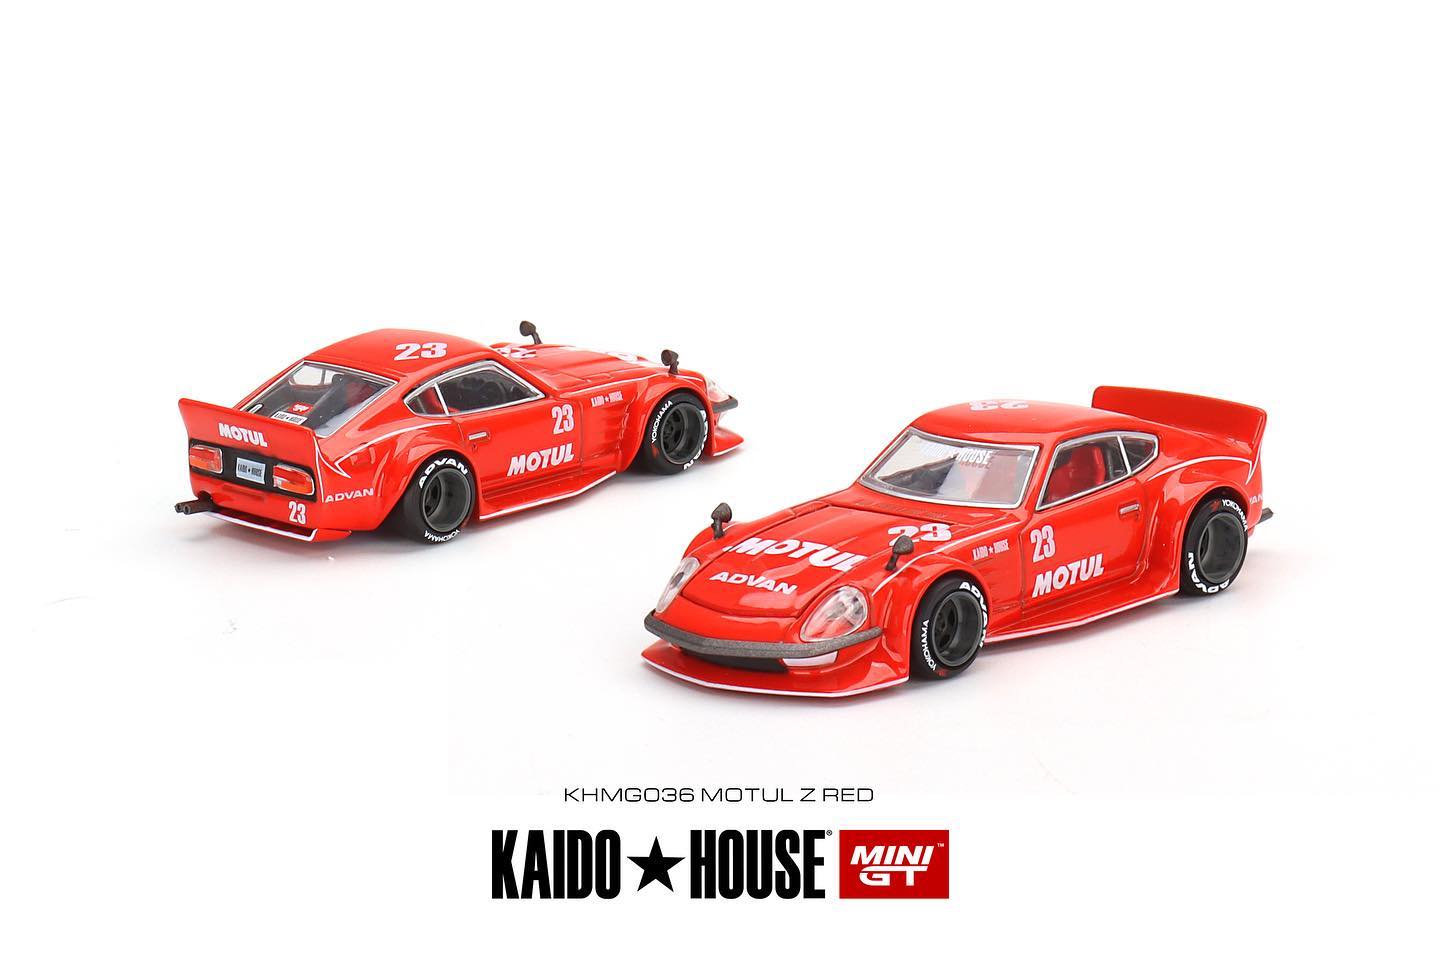 Mini GT x Kaido House Nissan Fairlady Z Motul Z in Red